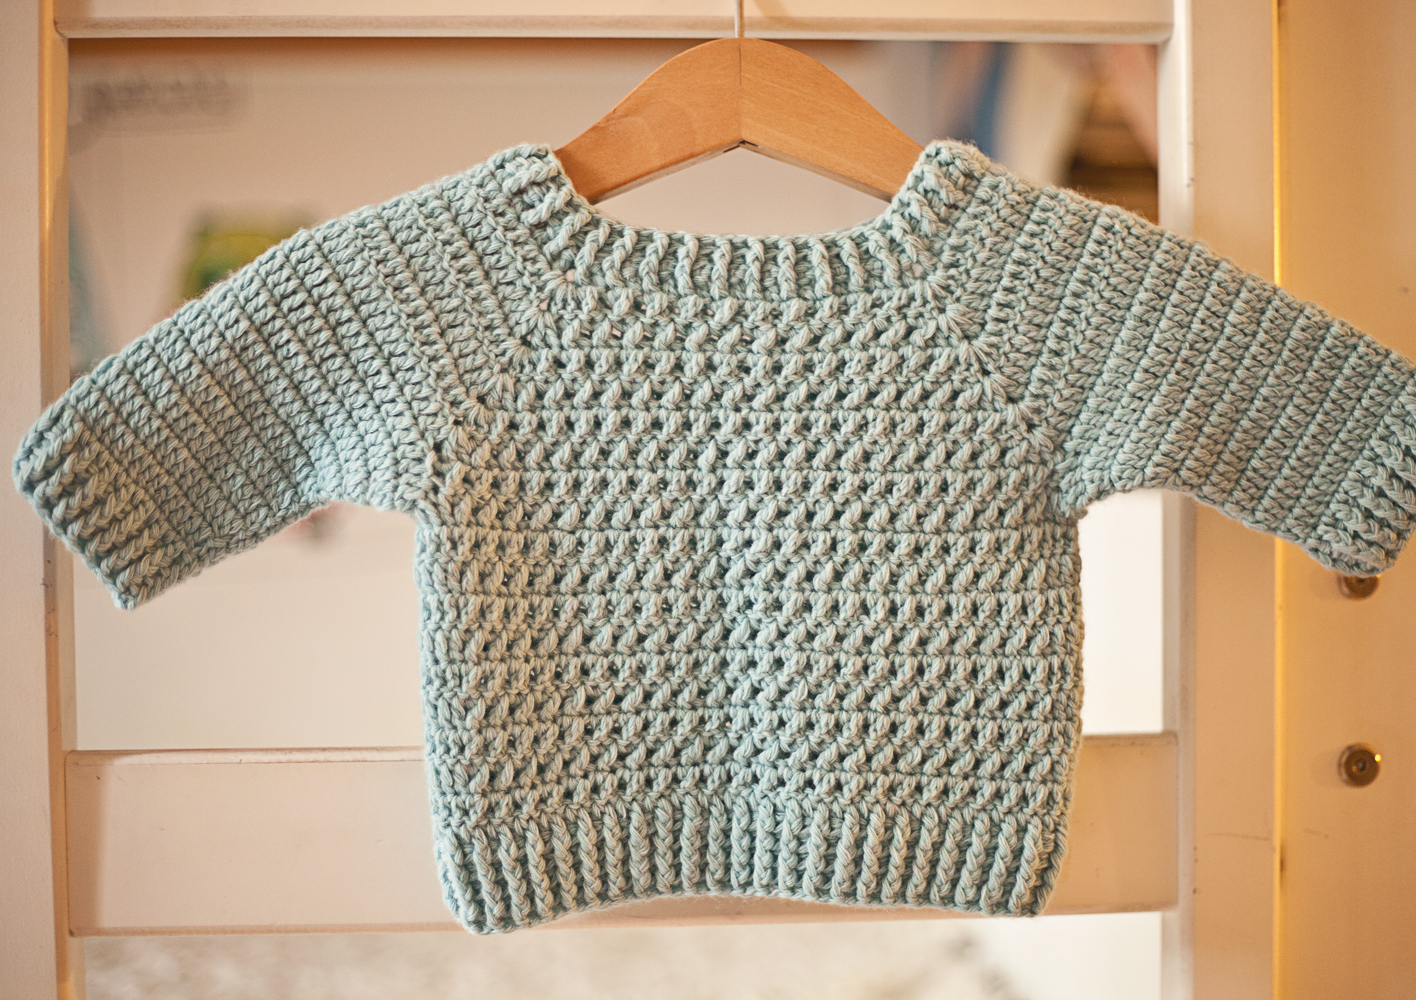 Crochet Coat Pattern Crochet For Boys Check Out Our New Sweater Pattern Mon Petit Violon